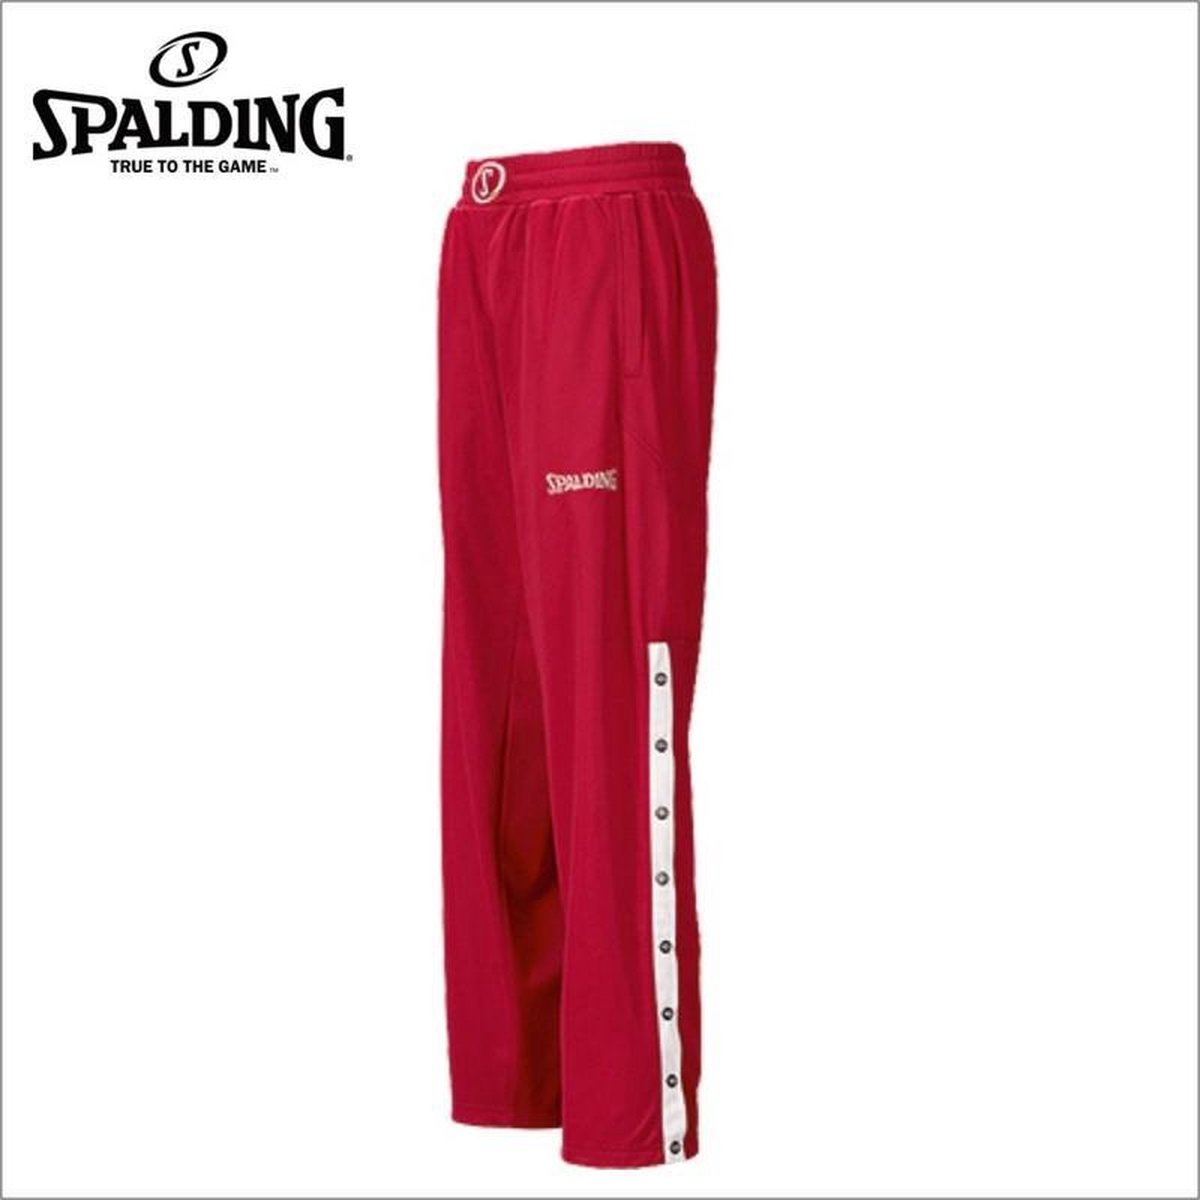 Spalding Basketbal Trainingsbroek rood/wit maat XXS | bol.com